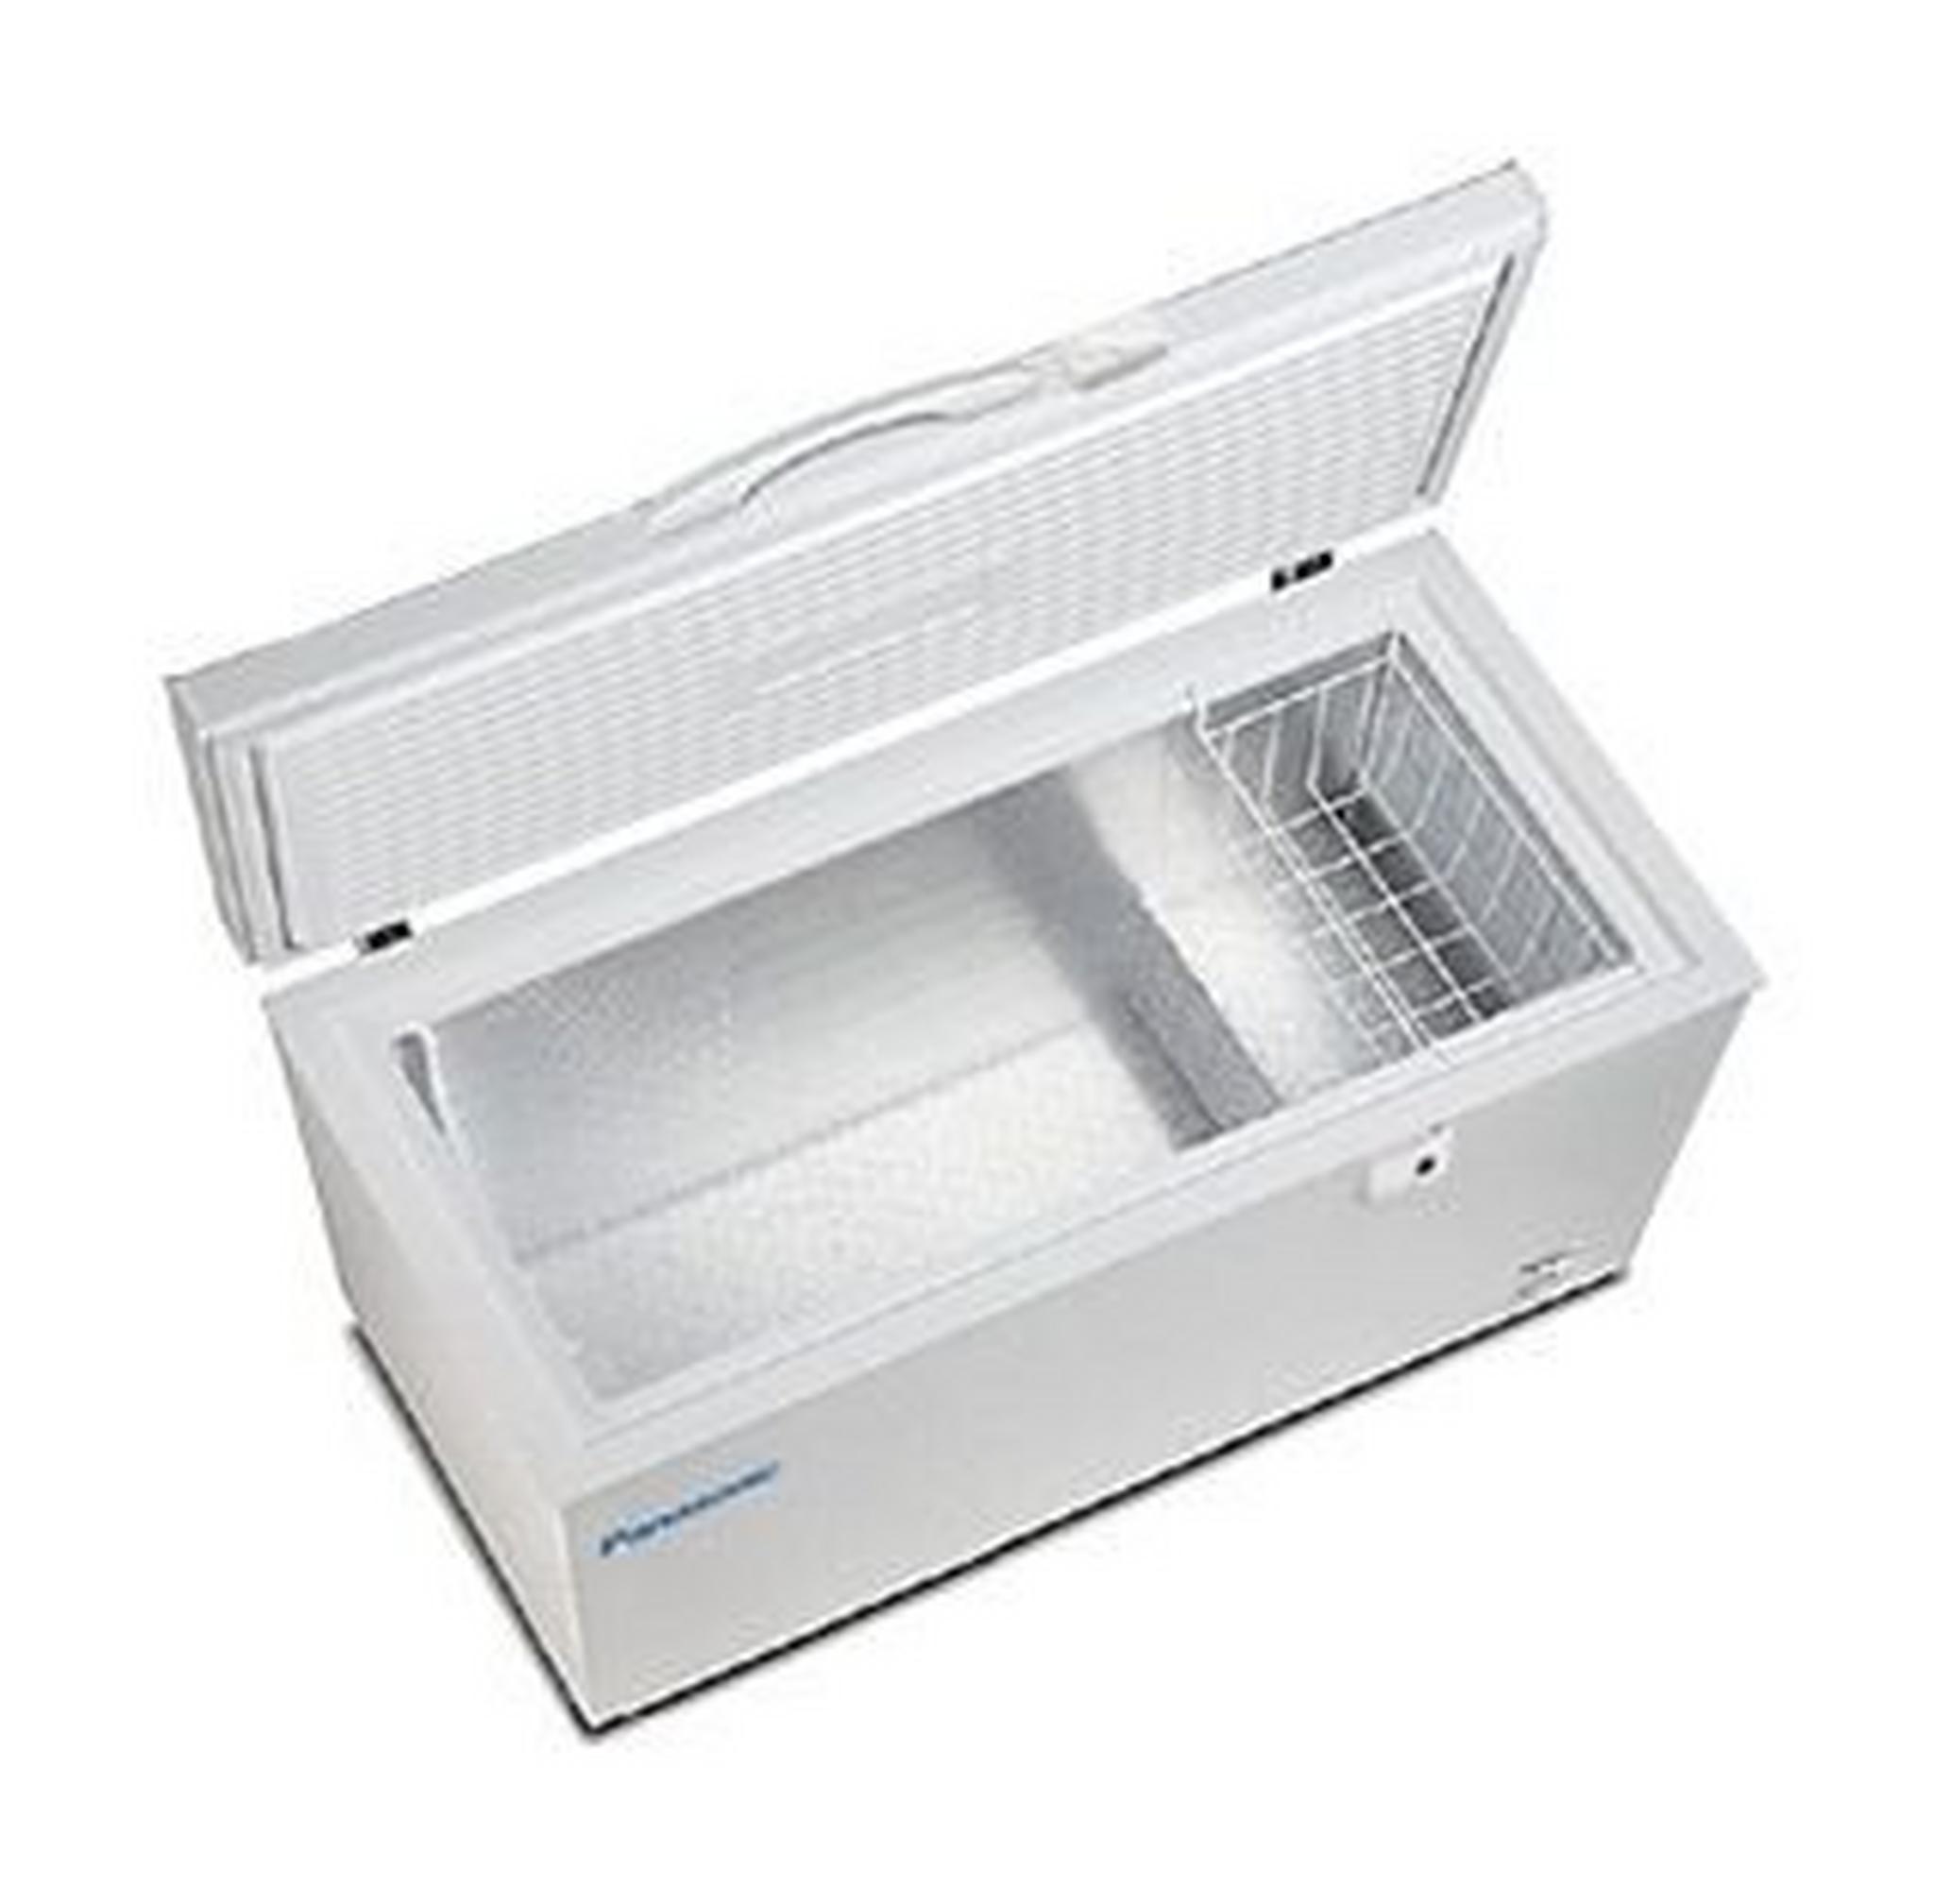 Panasonic 10 CFt Chest Freezer (SCR-CH300H2) - White